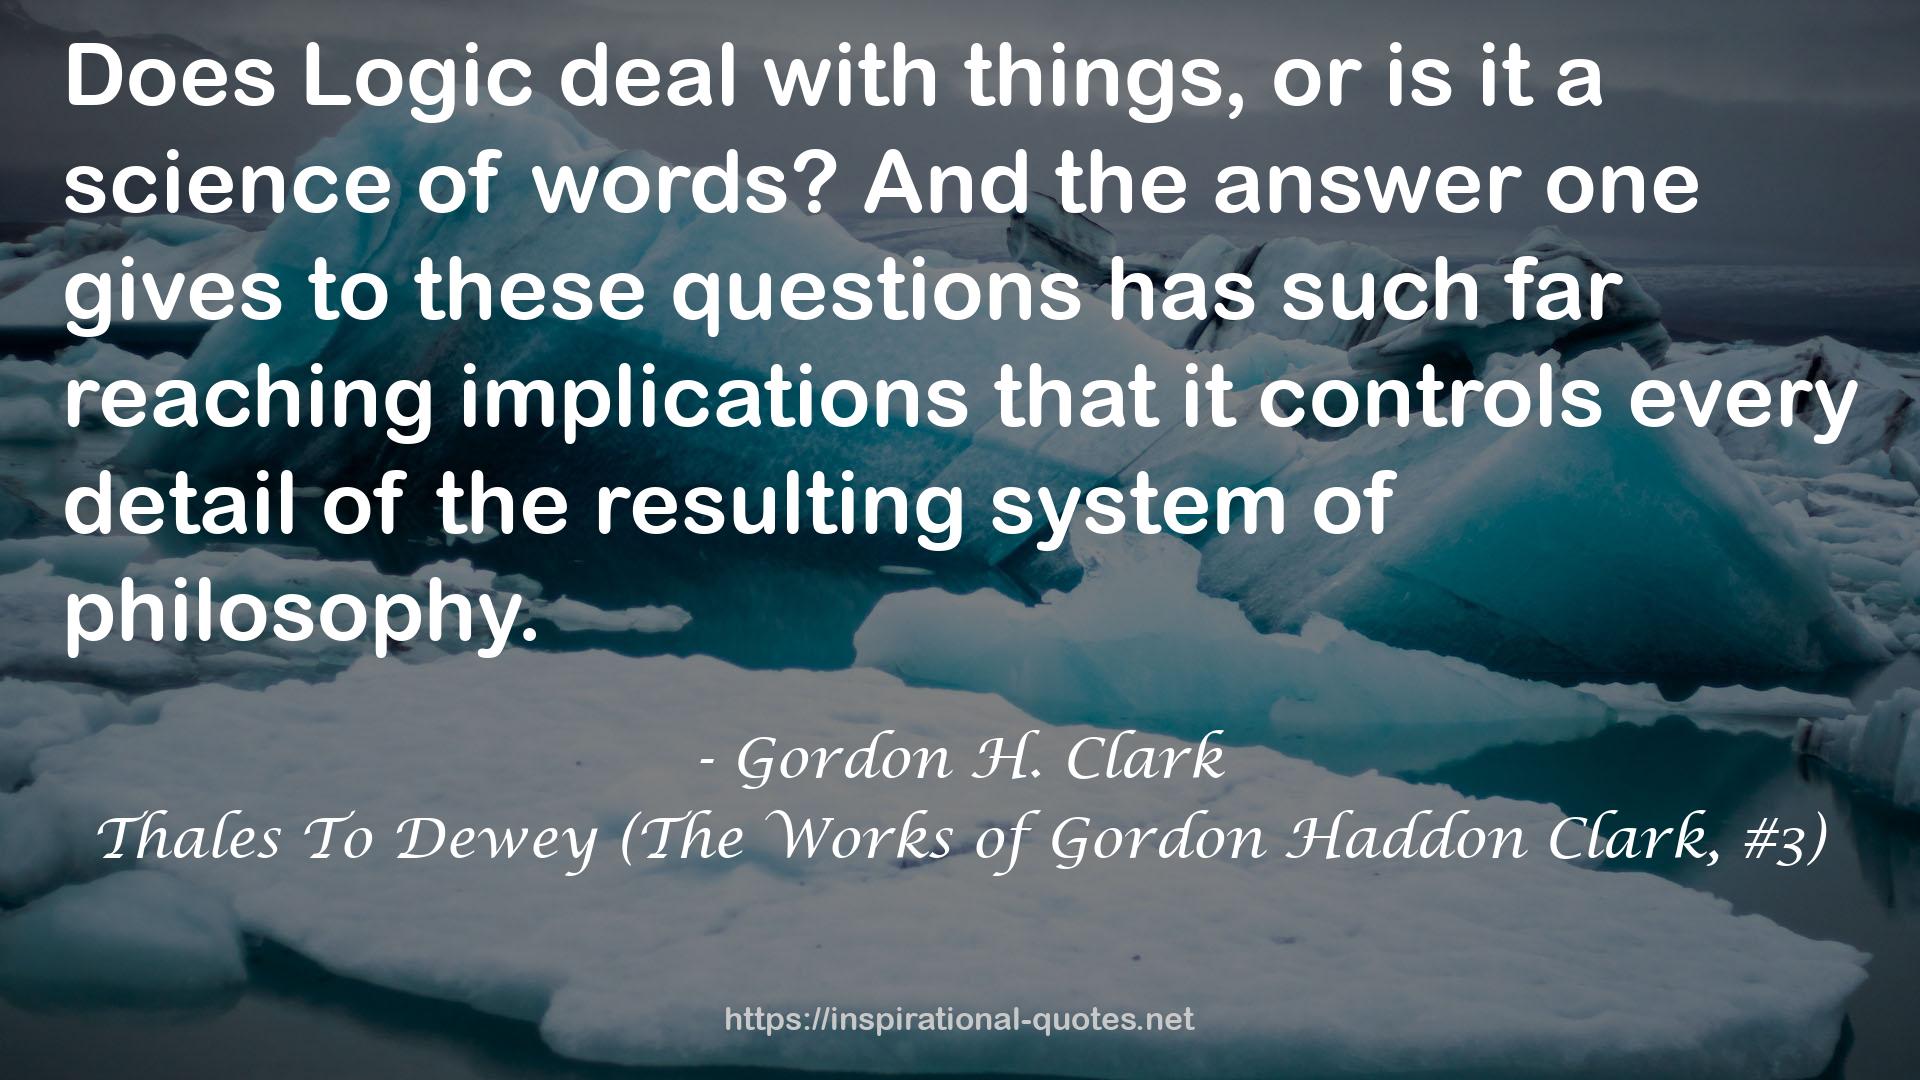 Thales To Dewey (The Works of Gordon Haddon Clark, #3) QUOTES